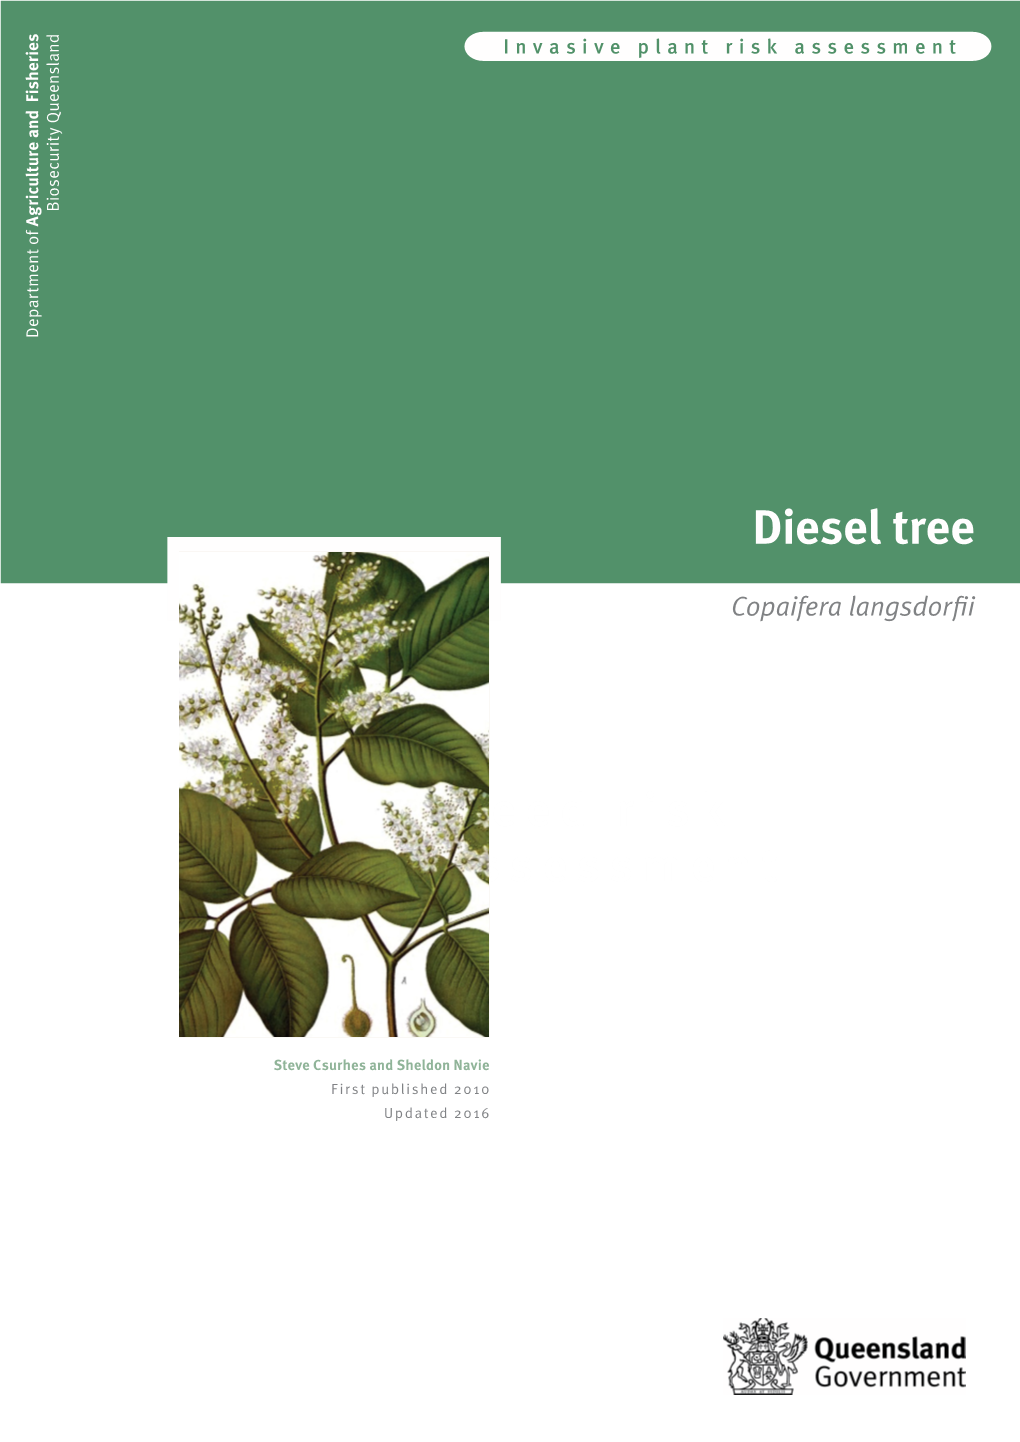 Invasive Weed Risk Assessment: Diesel Tree Copaifera Langsdorfii 2 Contents Introduction 5